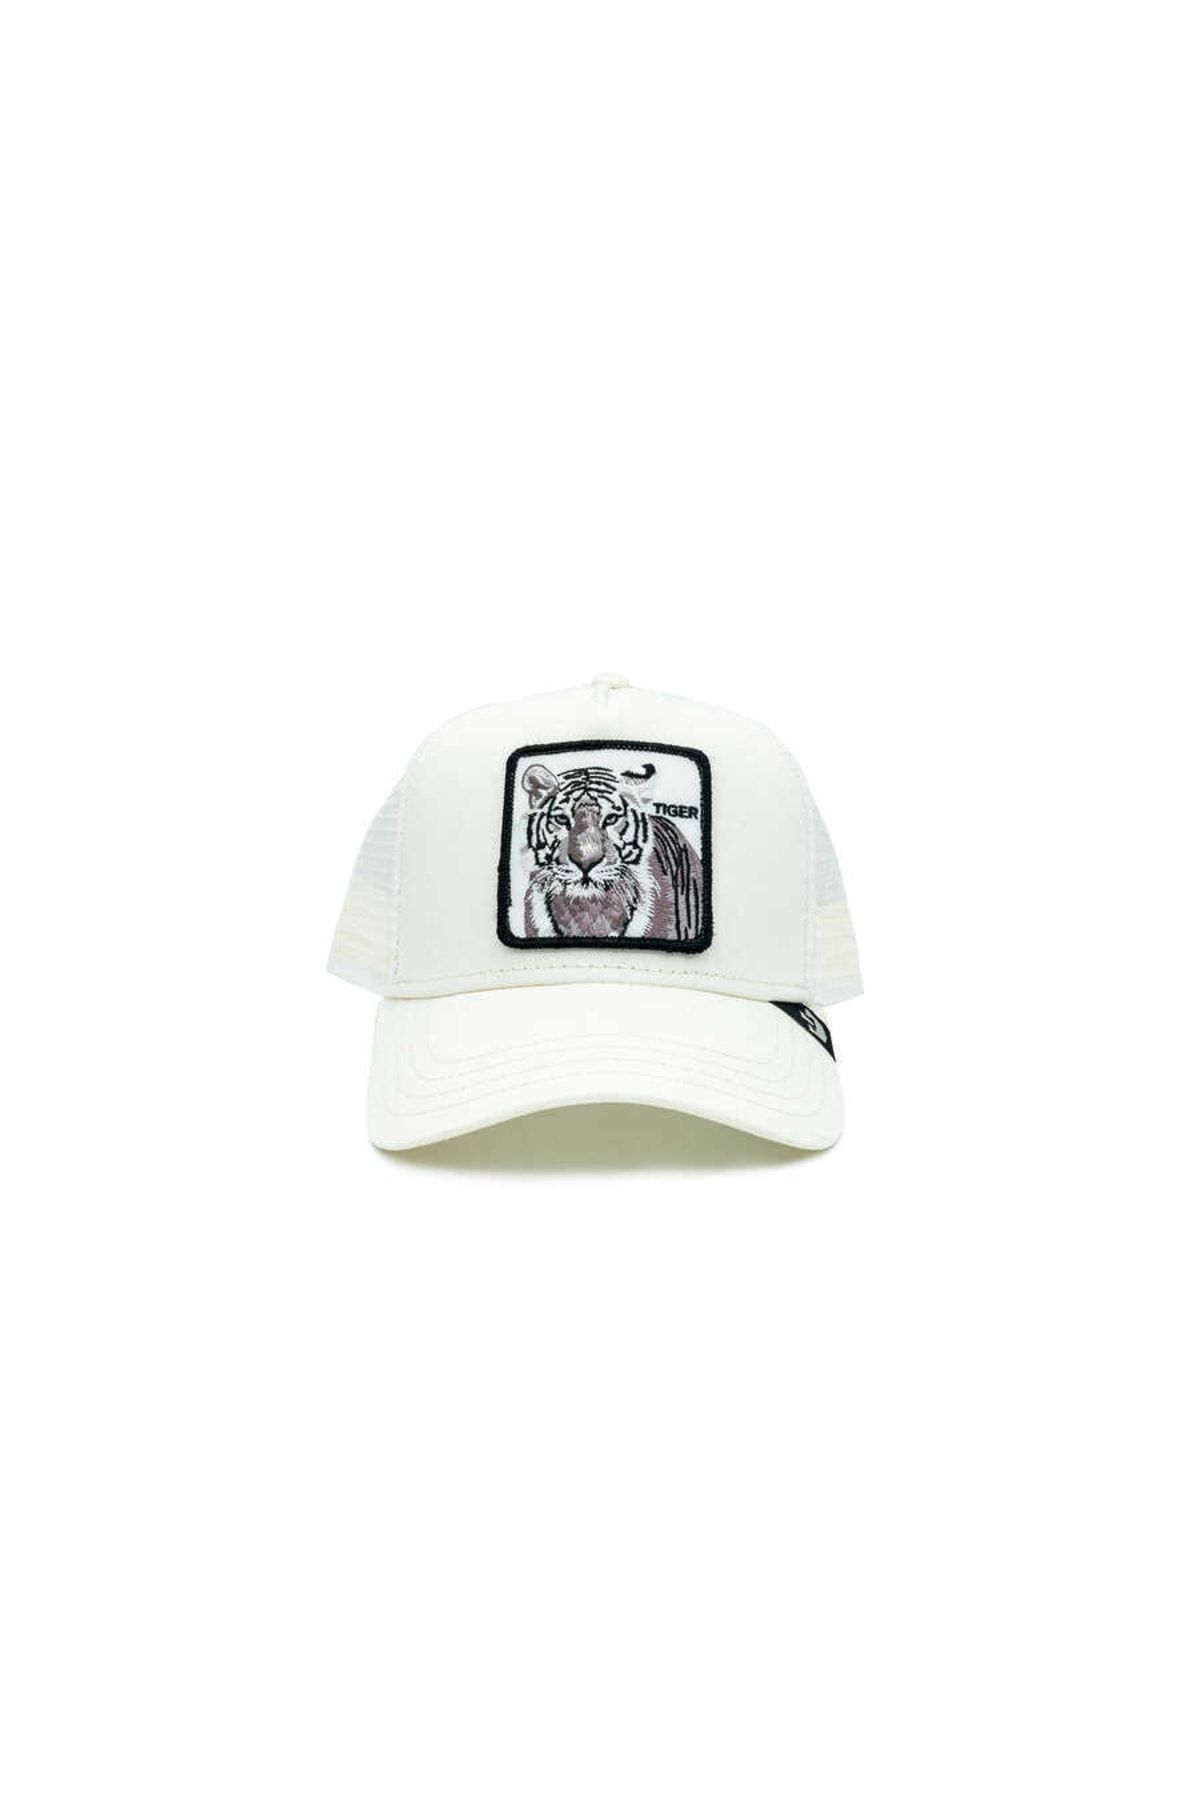 Goorin Bros . The White Tiger (kaplan Figürlü ) Şapka 101-0392